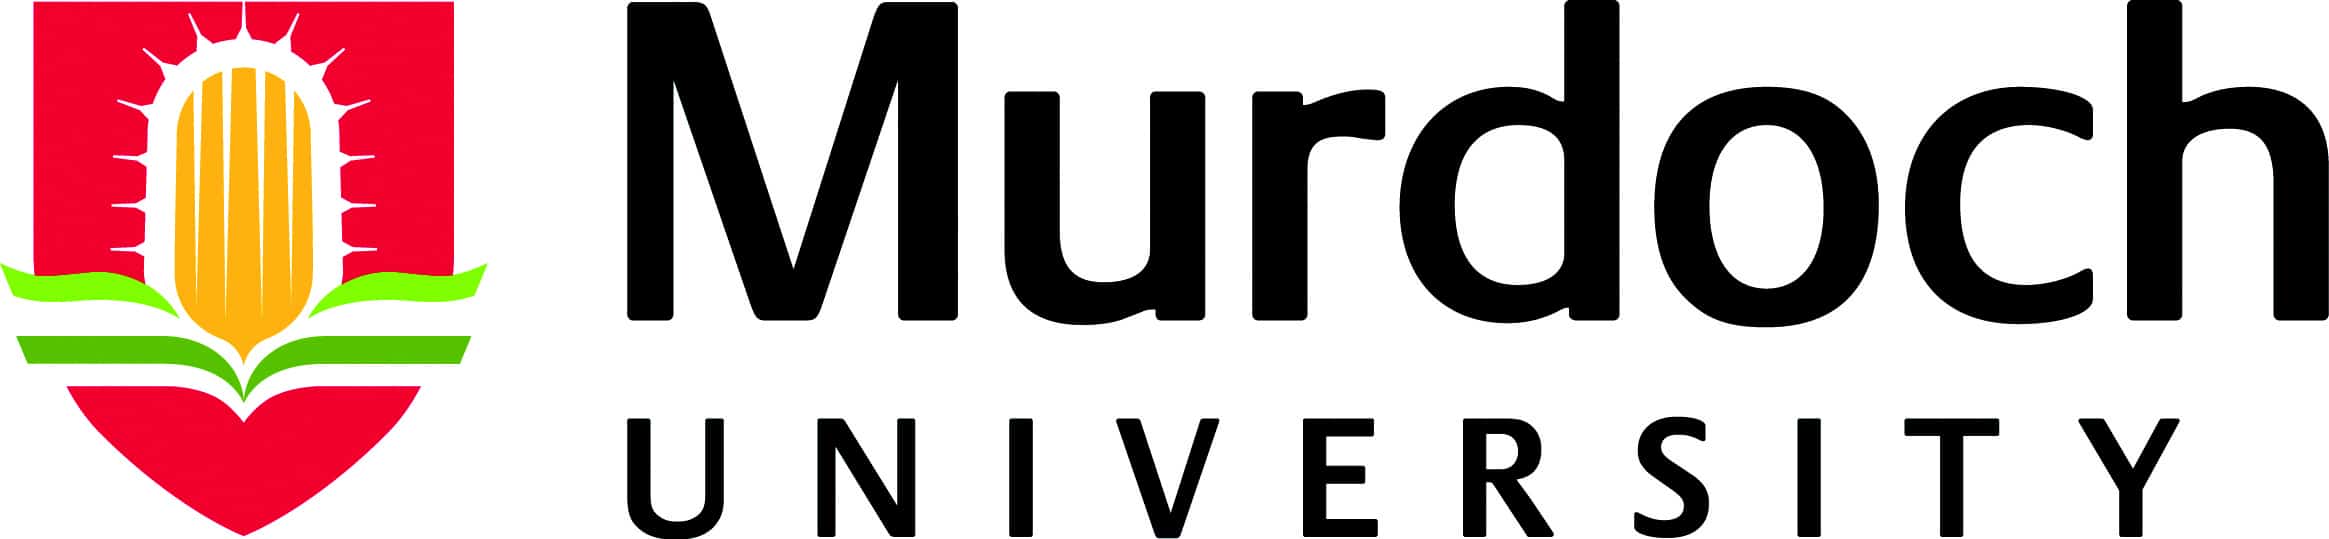 Murdoch University